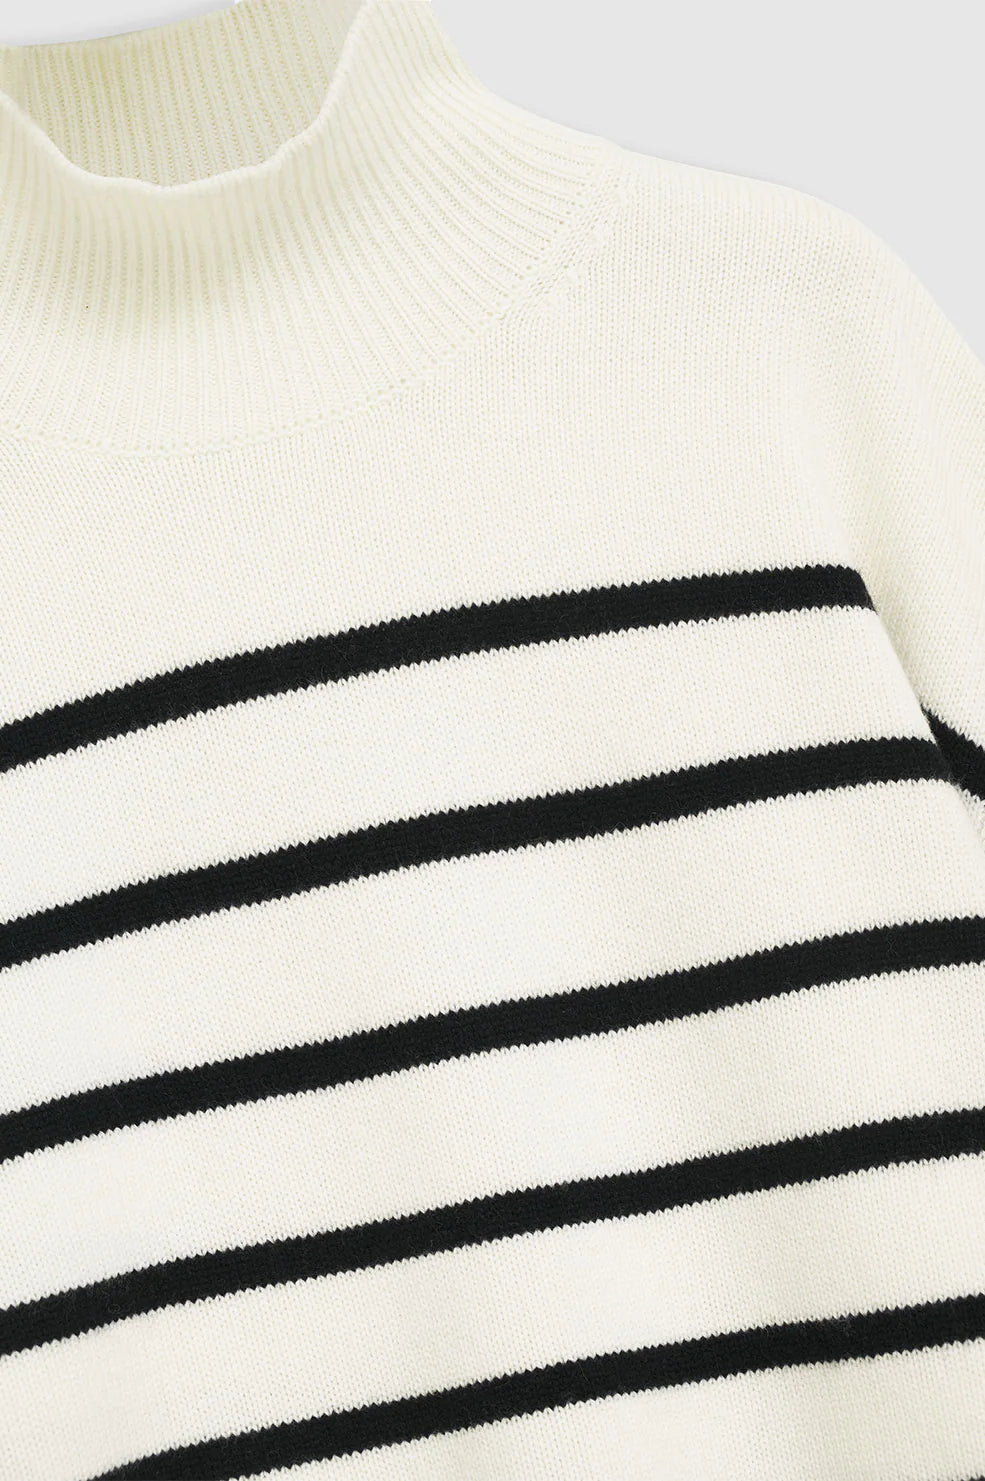 Anine Bing Courtney Sweater - Ivory and Black Stripe